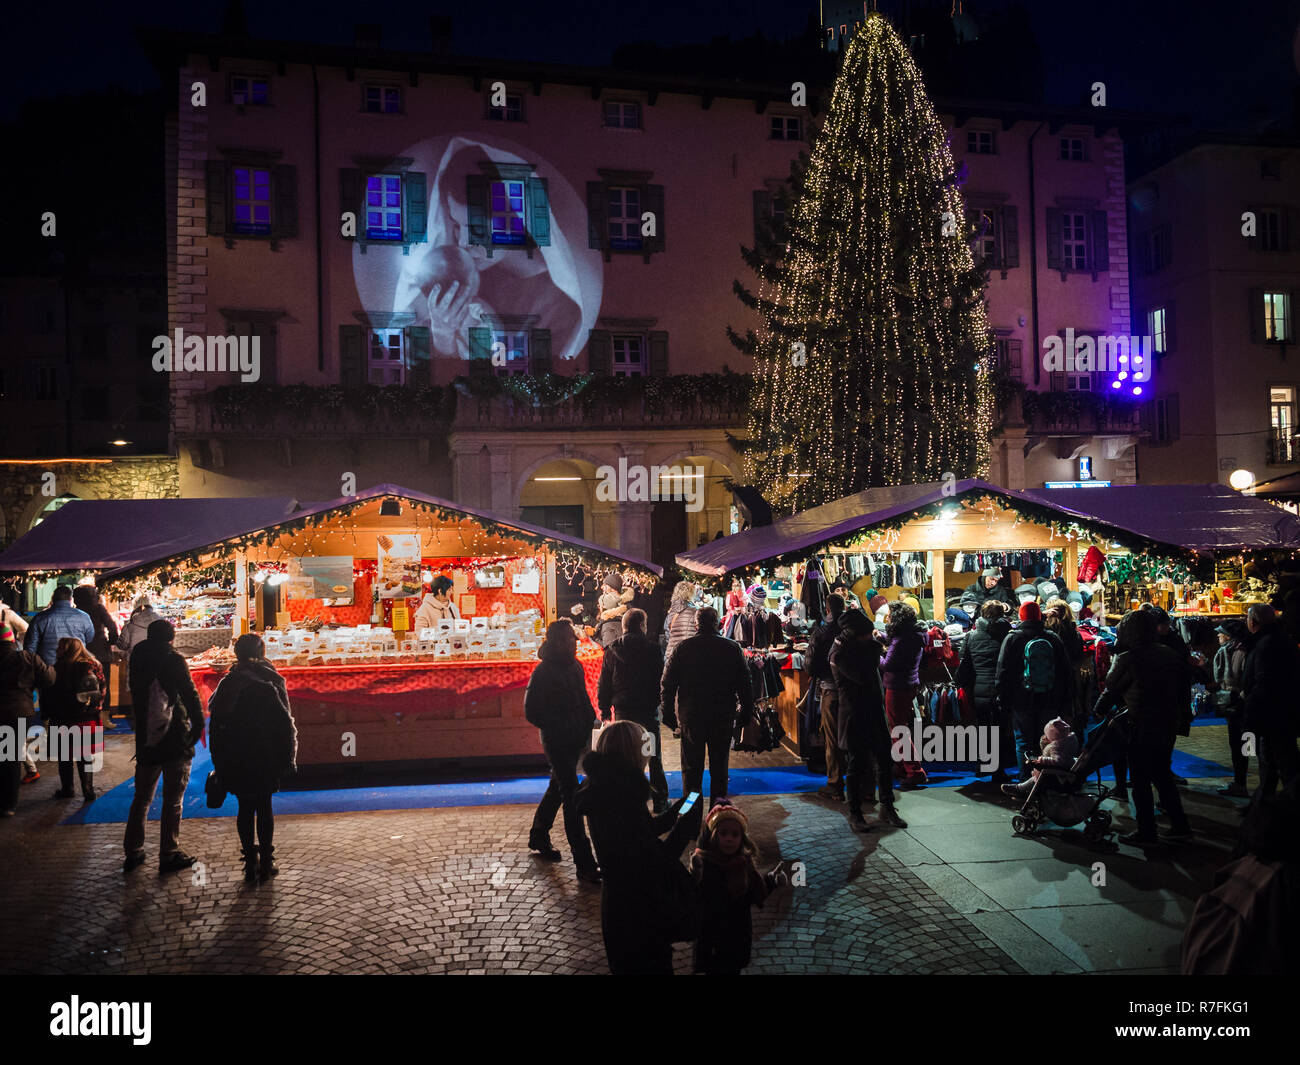 Arco, Italy - November 11, 2017: Characteristic Christmas markets in the main square. Stock Photo